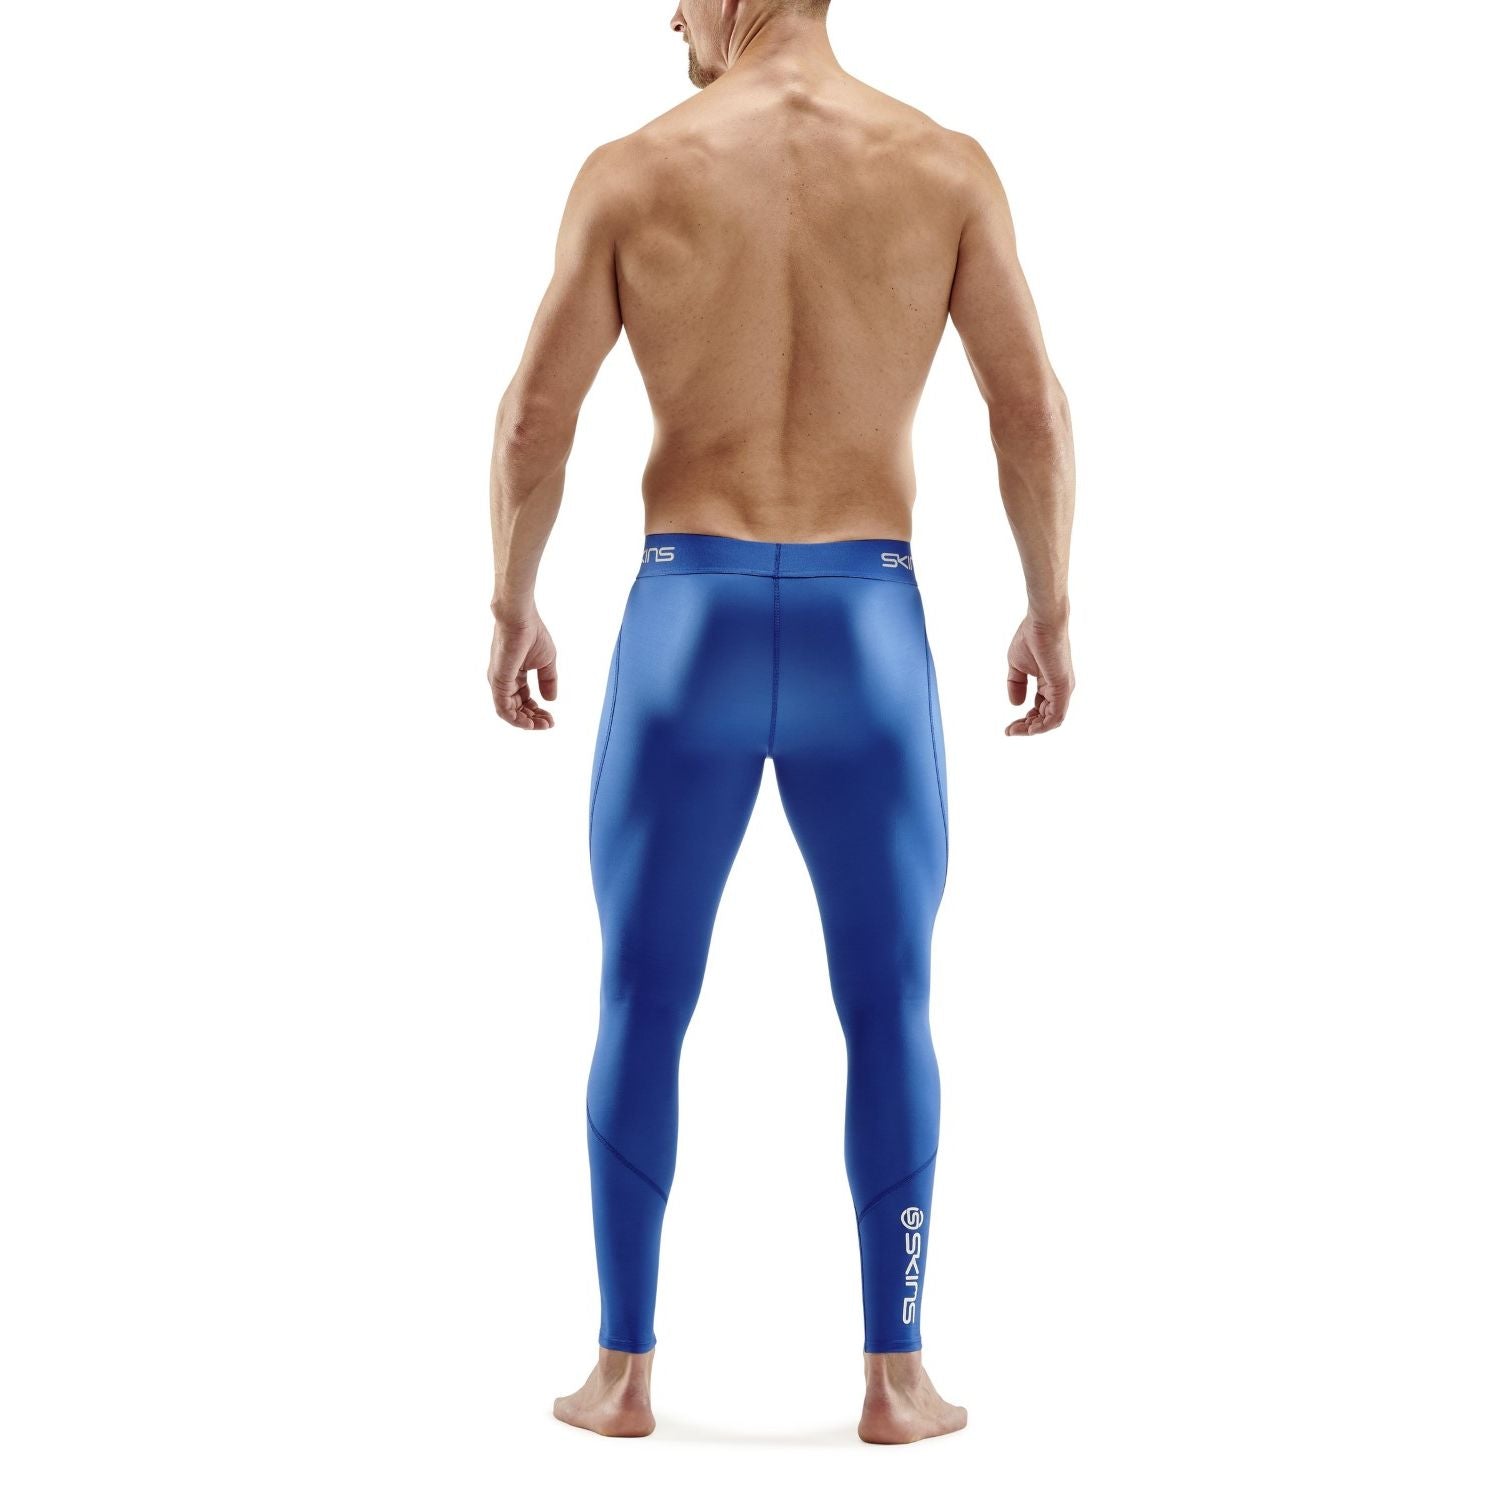 Skins Series-1 Mens Compression Shorts - Bright Blue